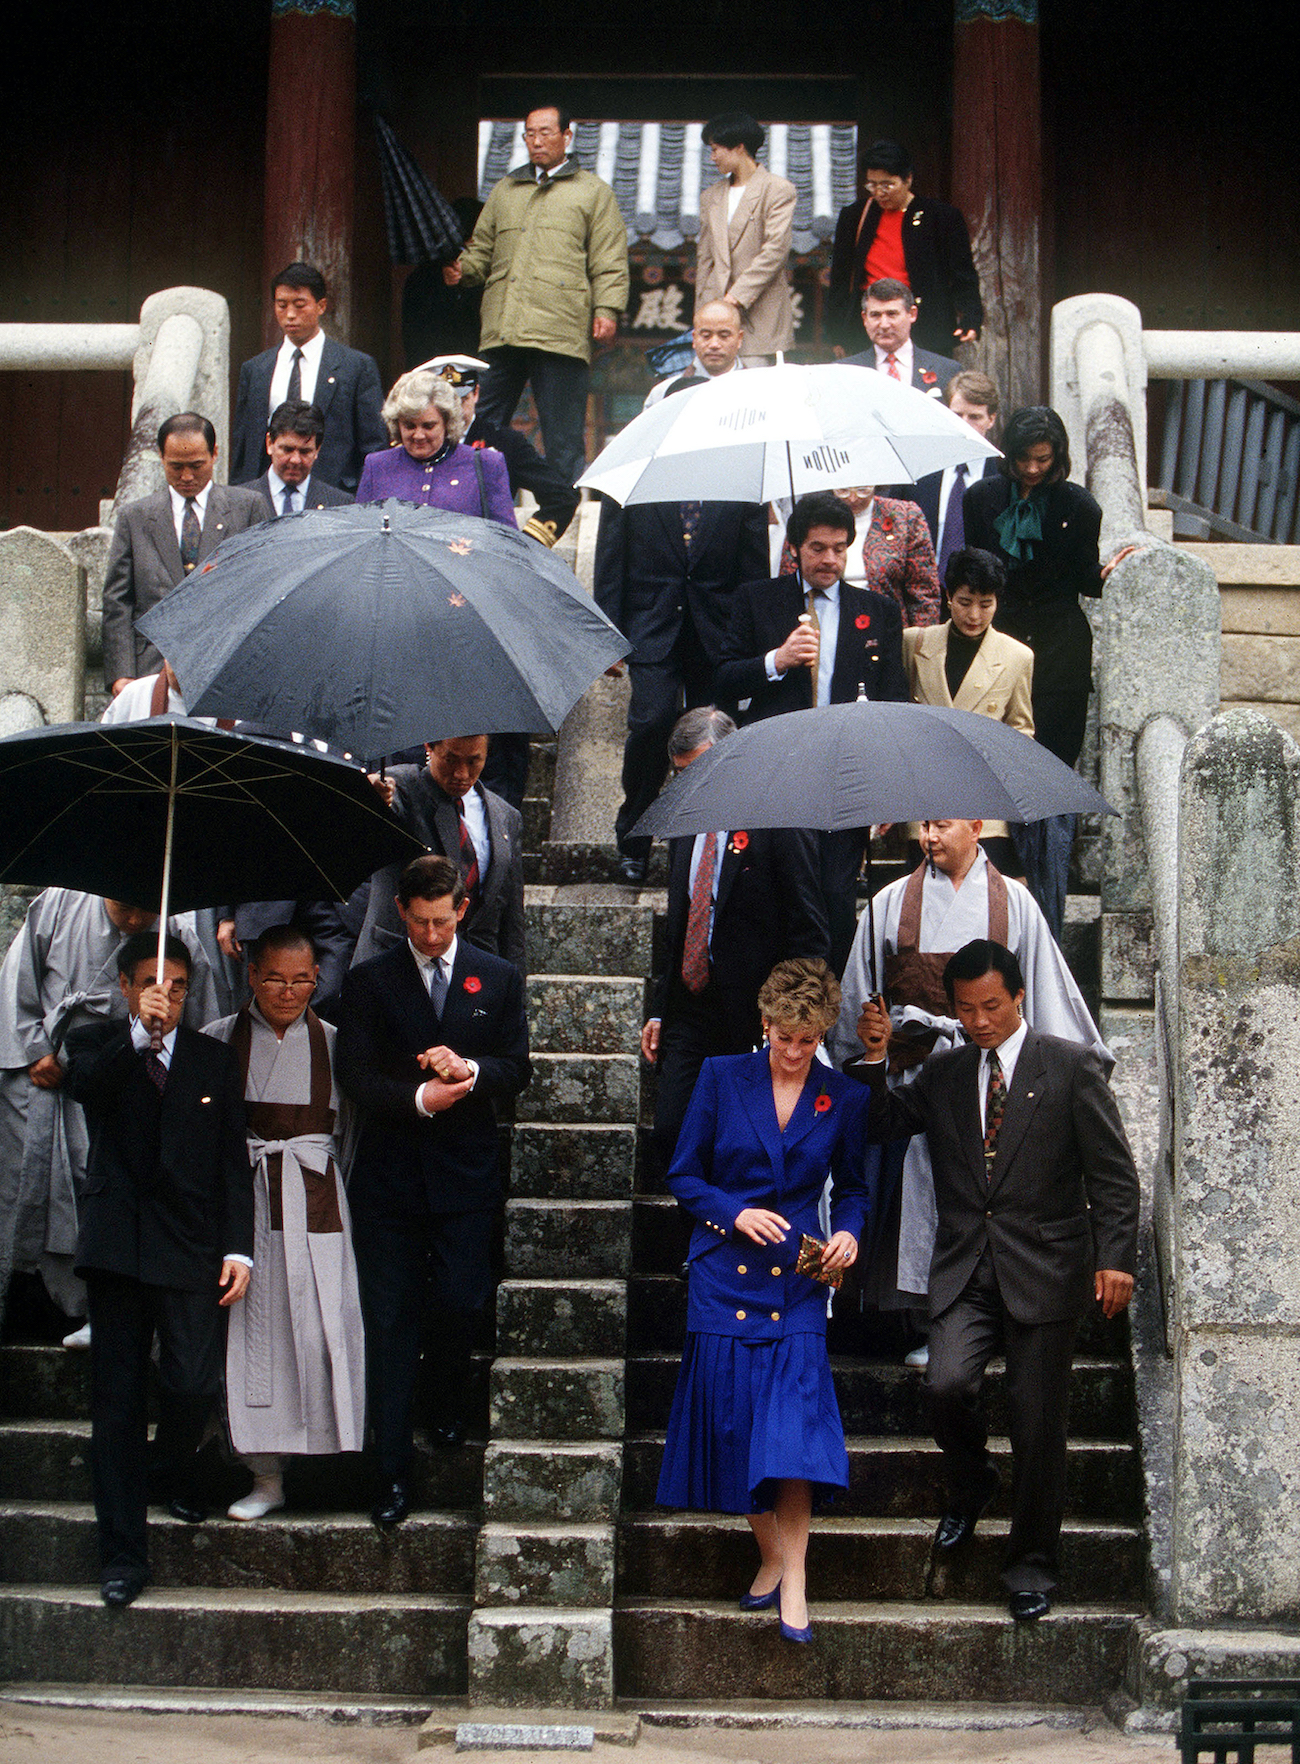 Prince Charles and Princess Diana walk down separate staircases at South Korean temple